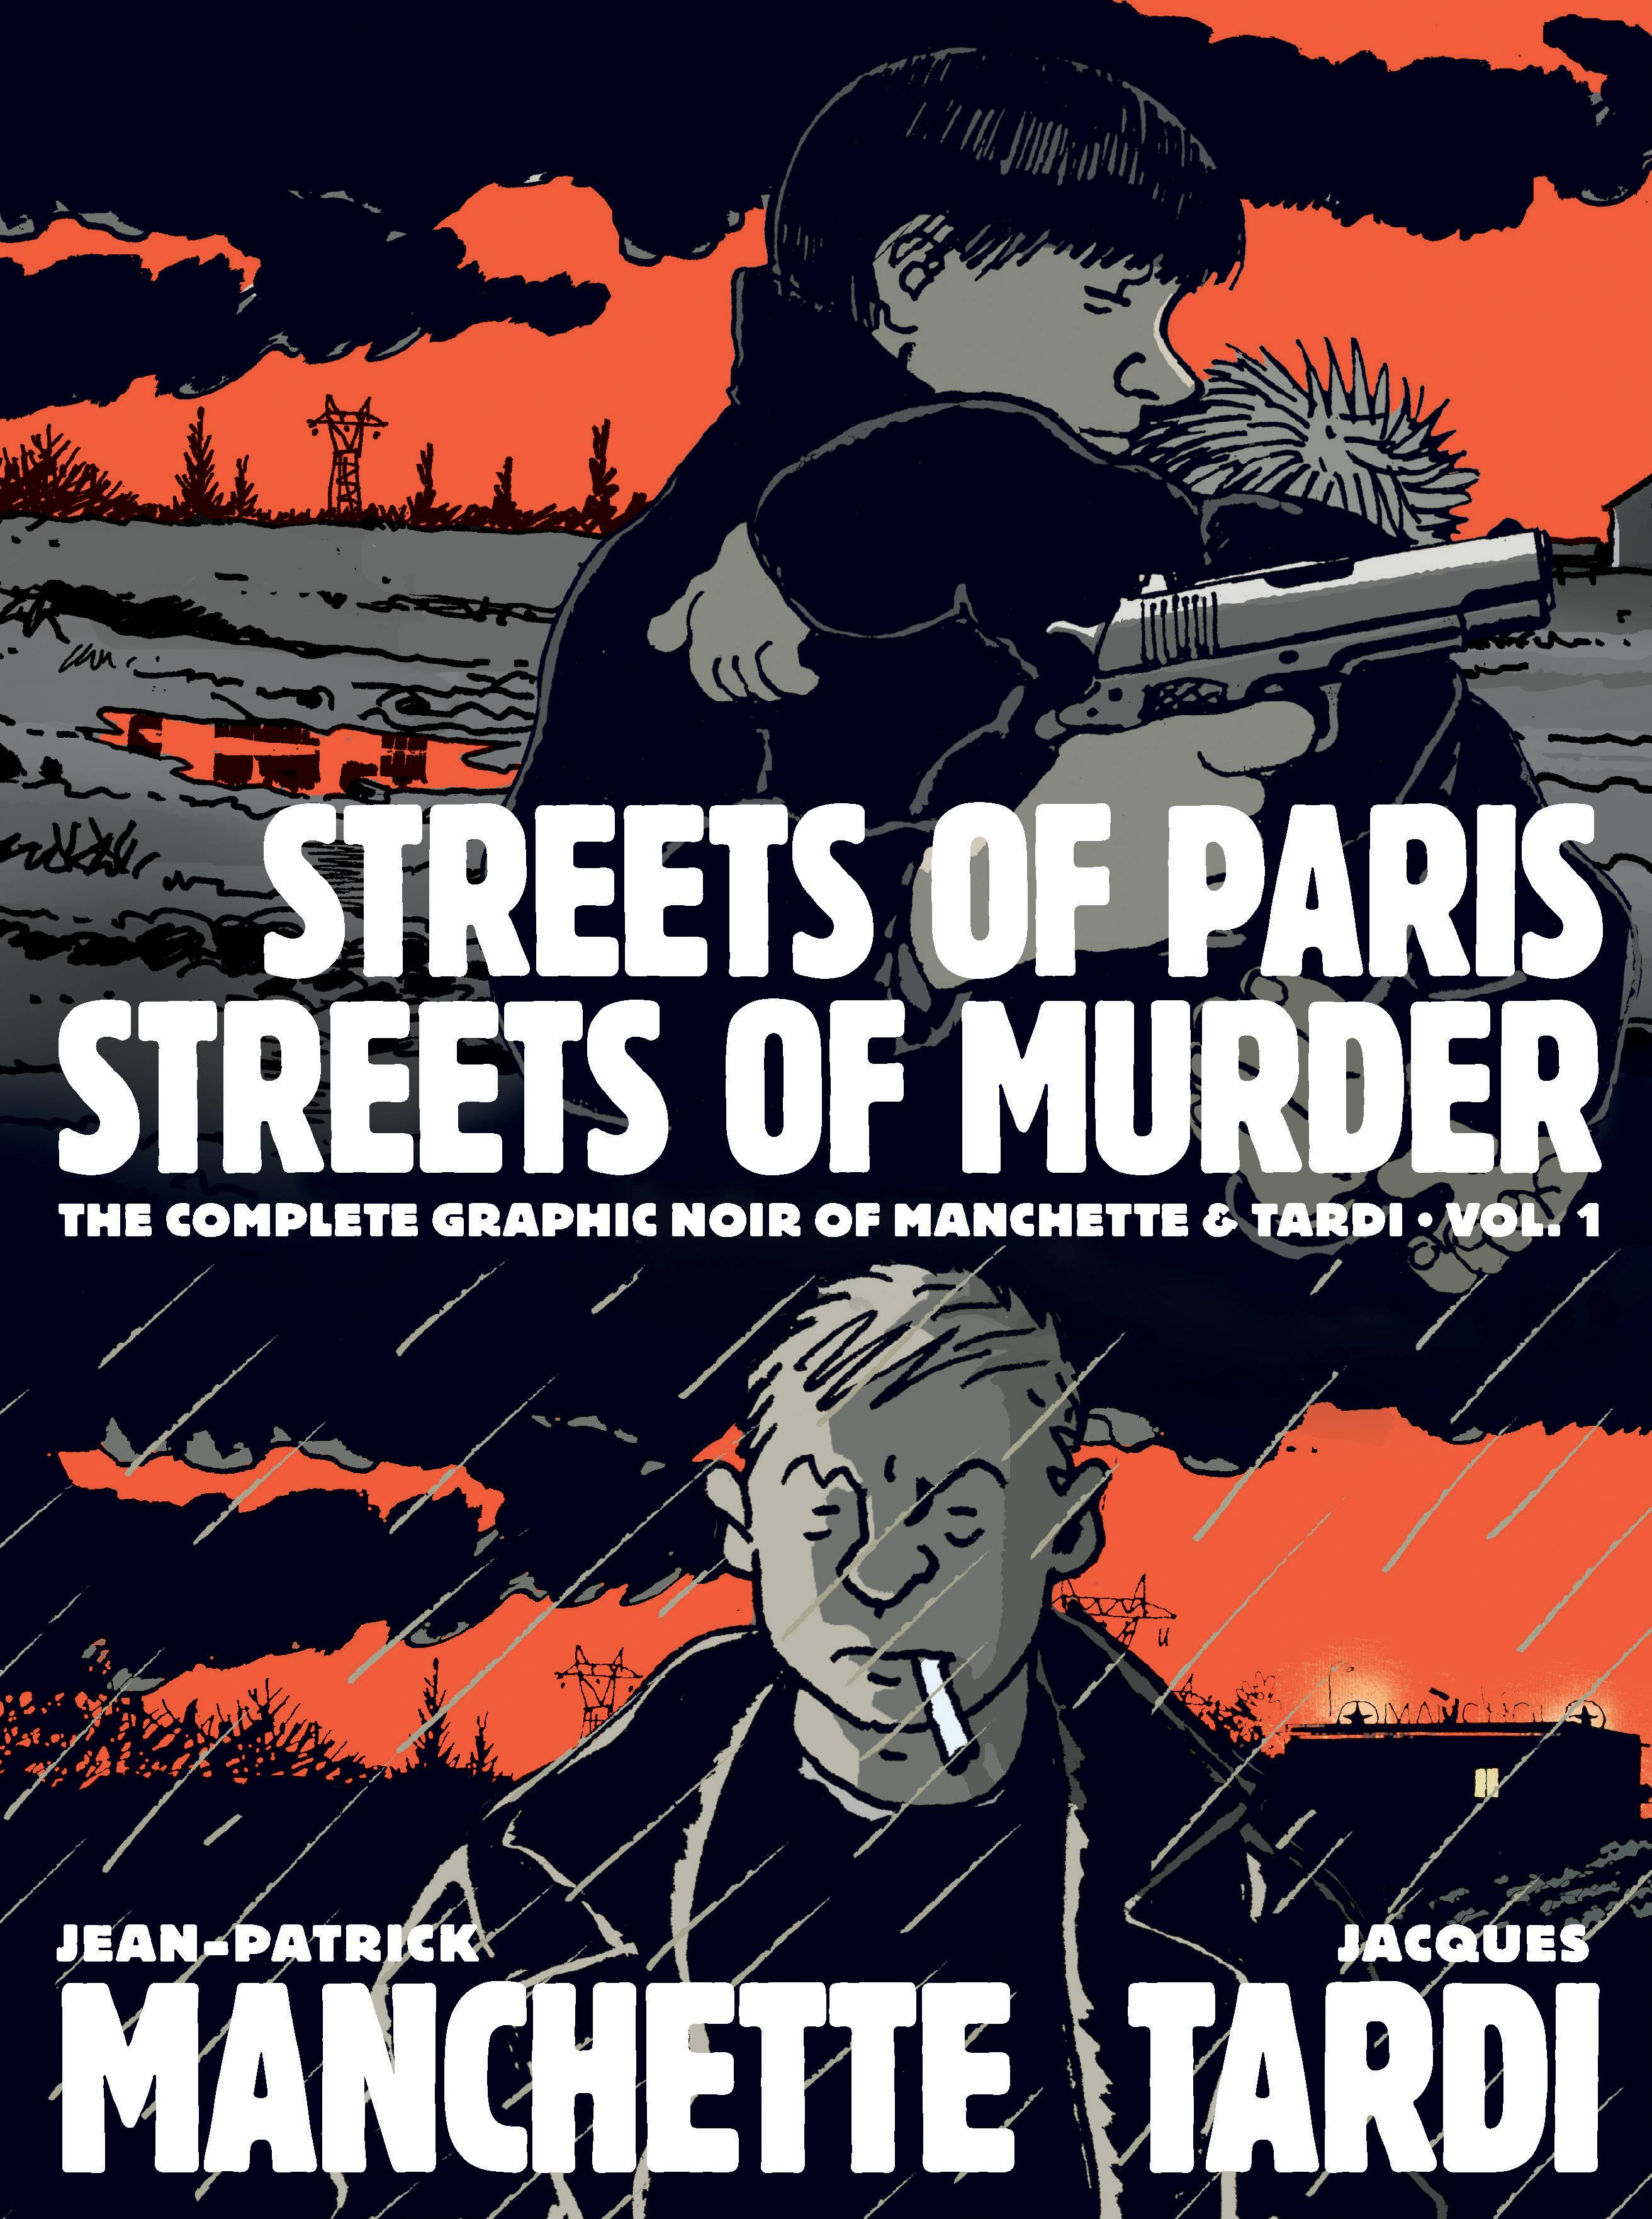 Complete Noir Manchette Tardi Hardcover Volume 1 Streets Paris Murder